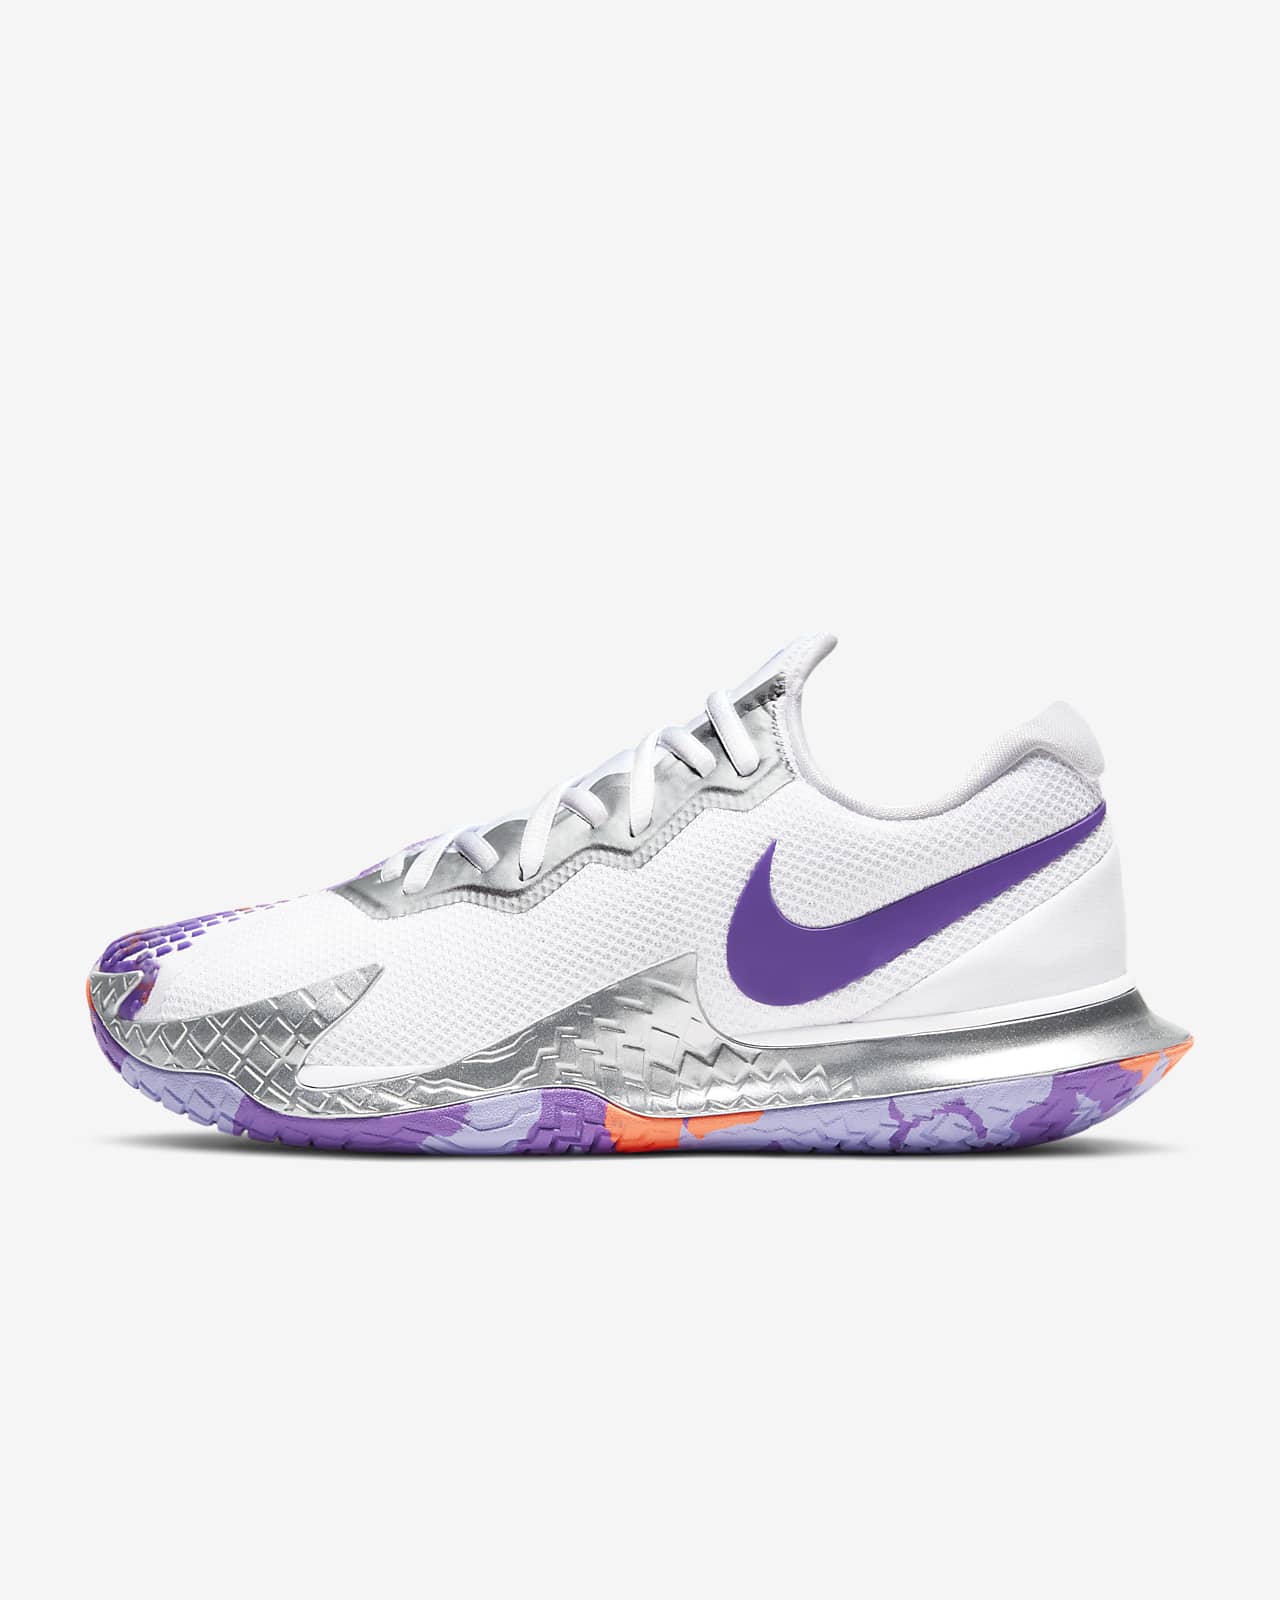 nike purple tennis shoes